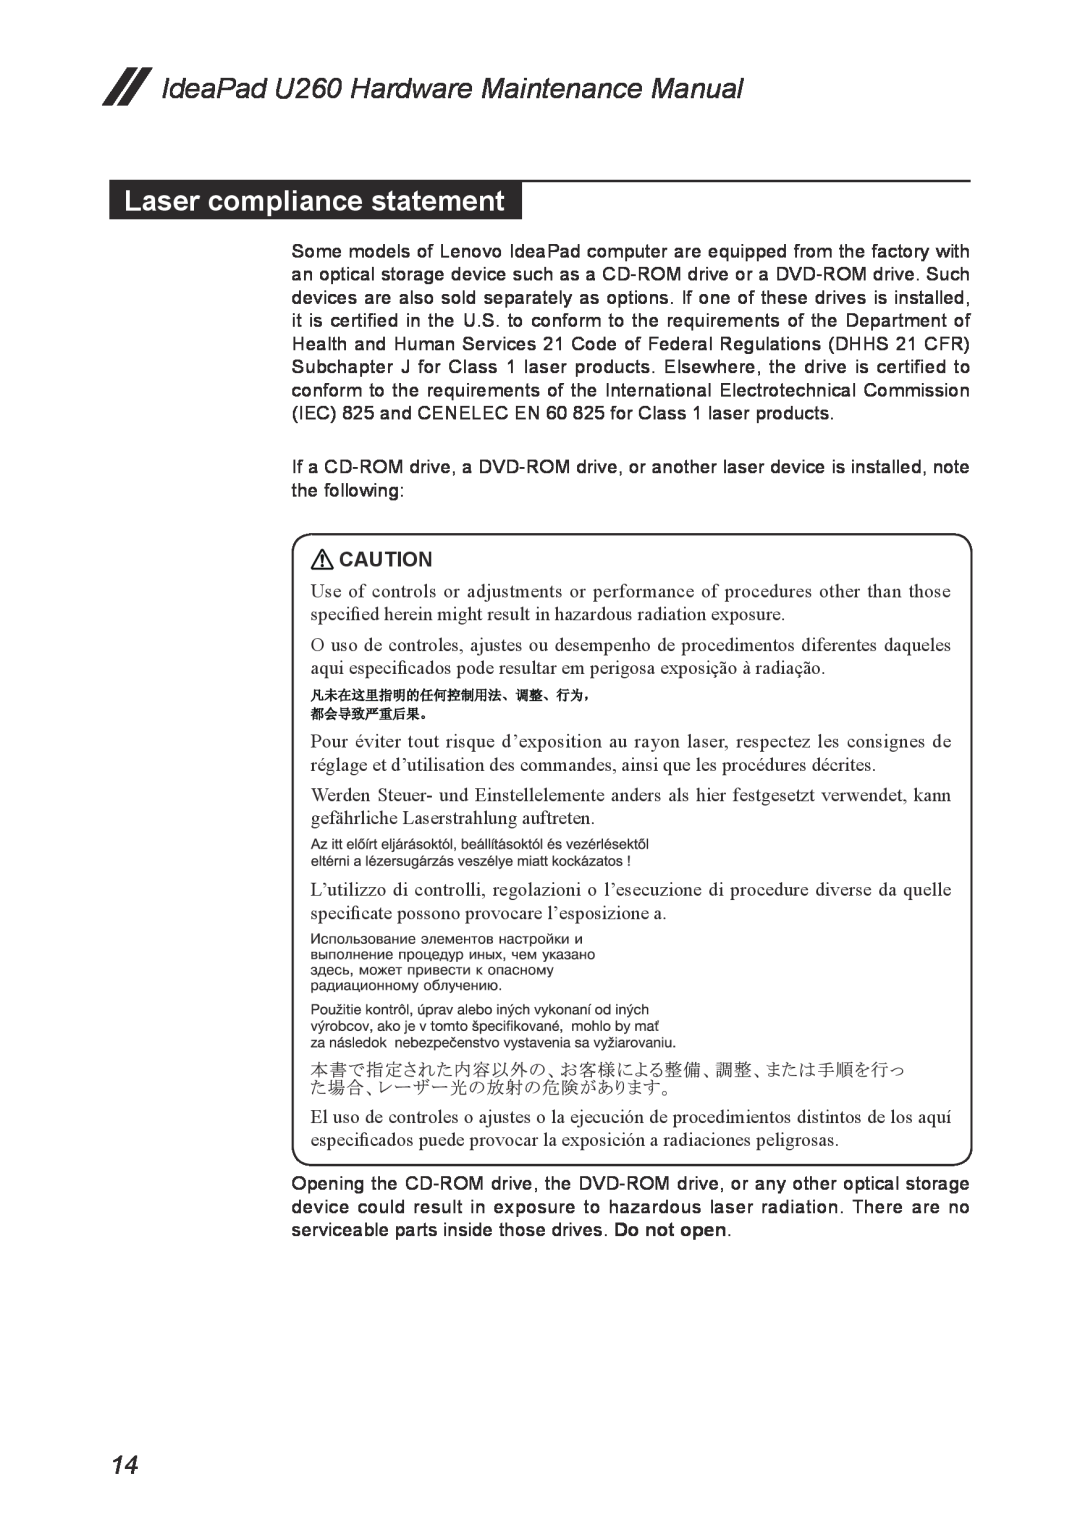 Lenovo manual Laser compliance statement, IdeaPad U260 Hardware Maintenance Manual 